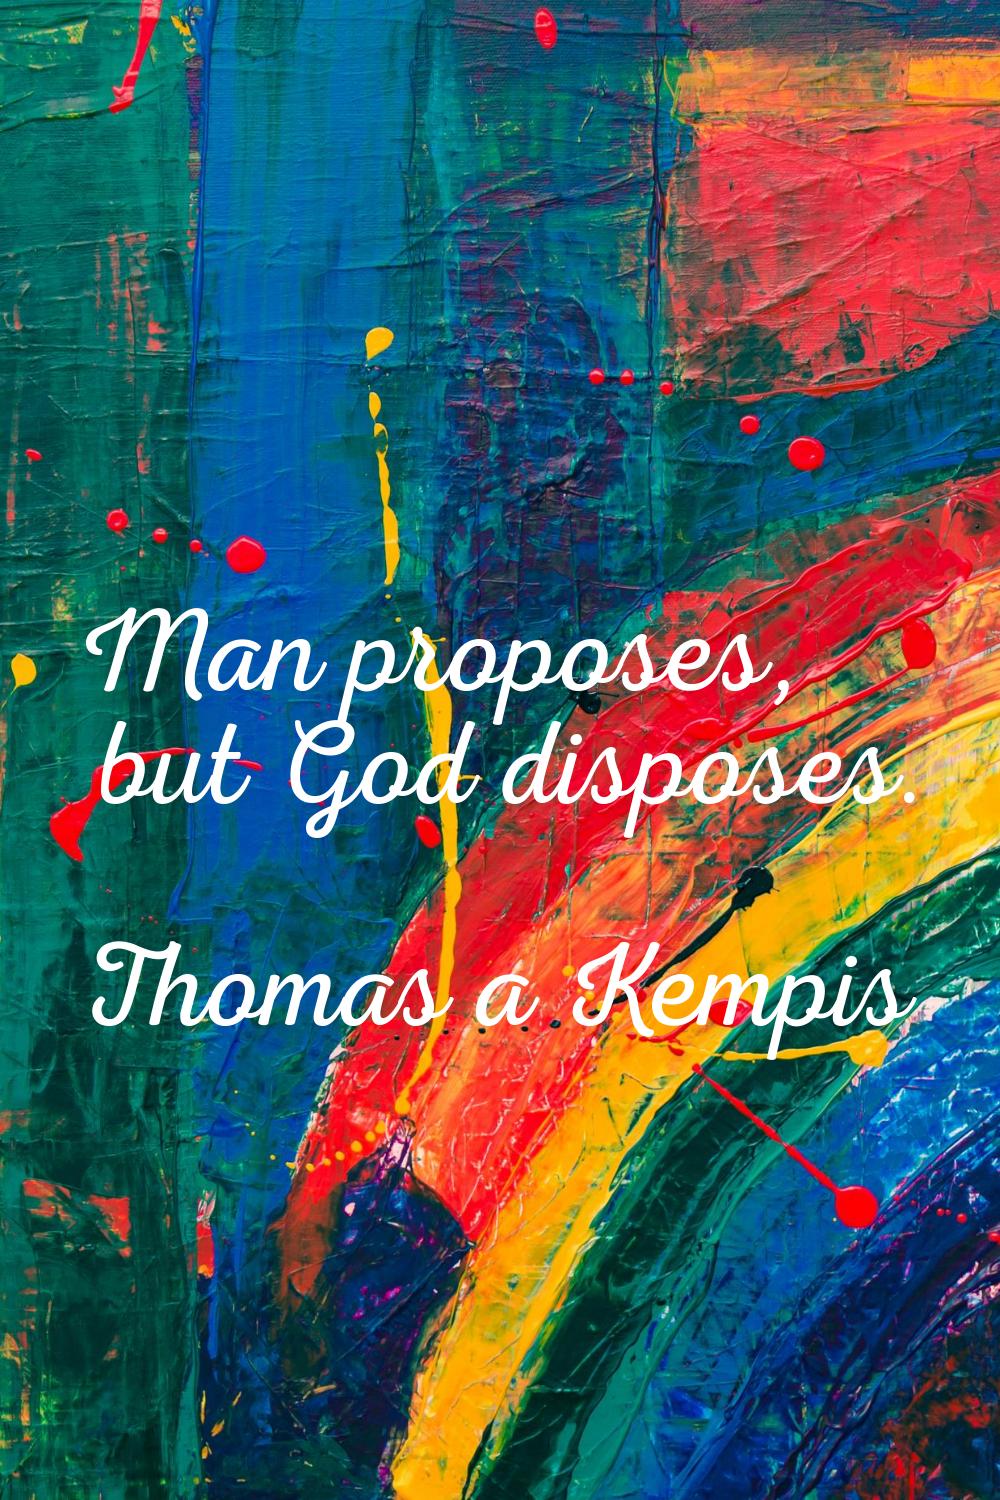 Man proposes, but God disposes.